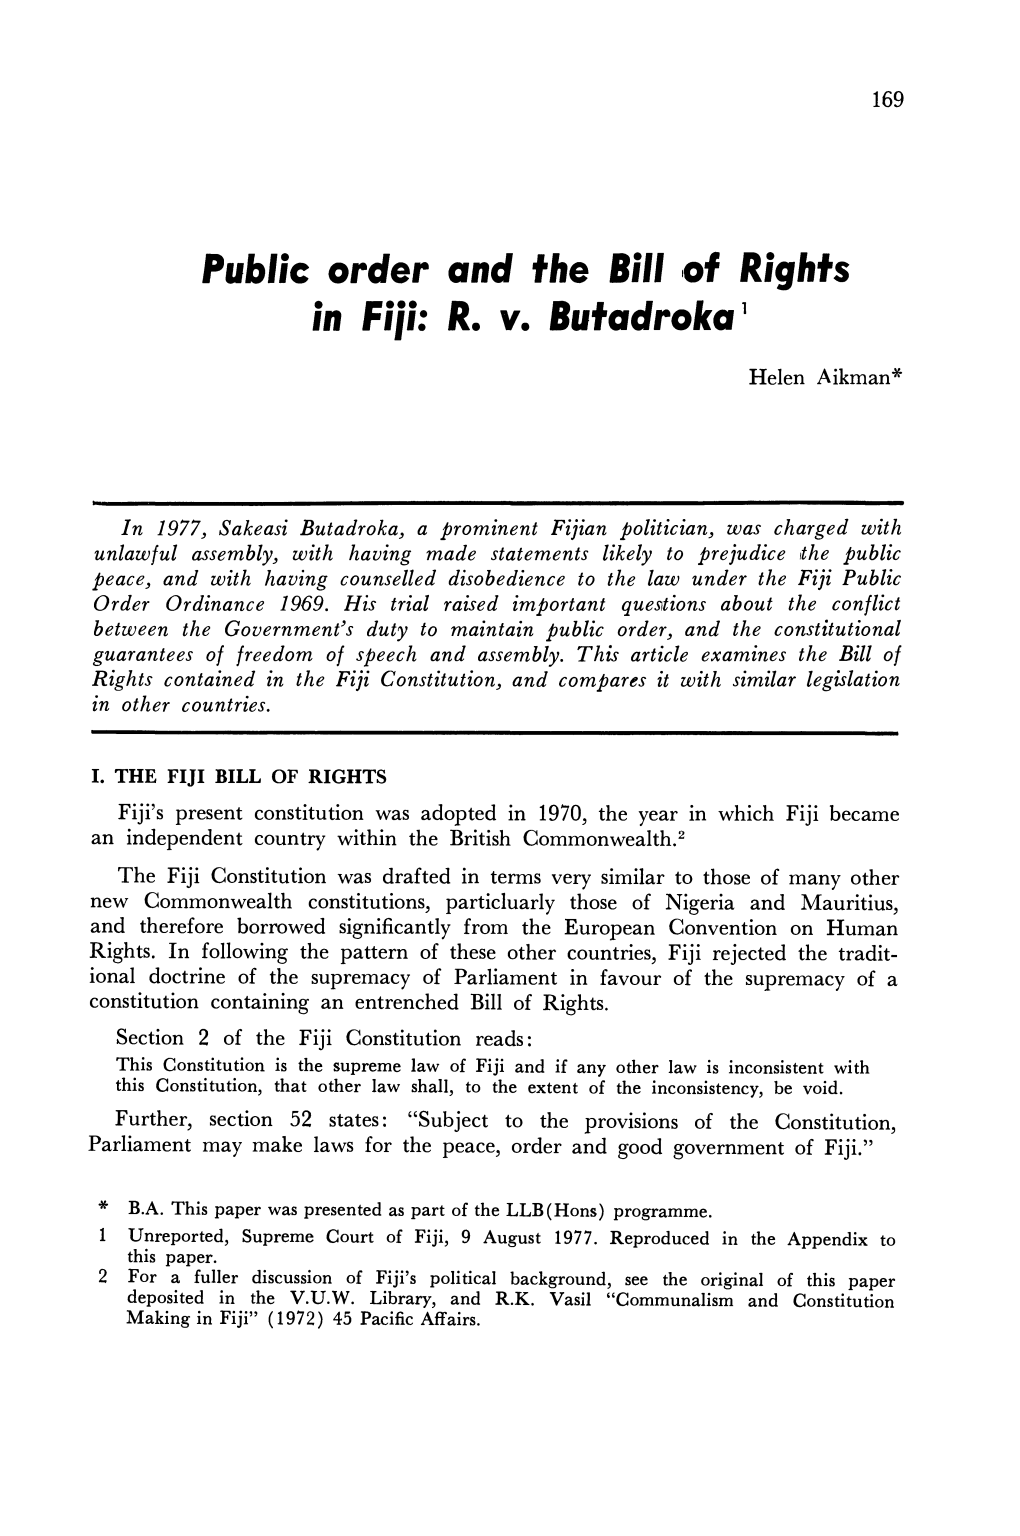 Public Order and the Bill of Rights in Fiji: R. V. Butadroka* 1